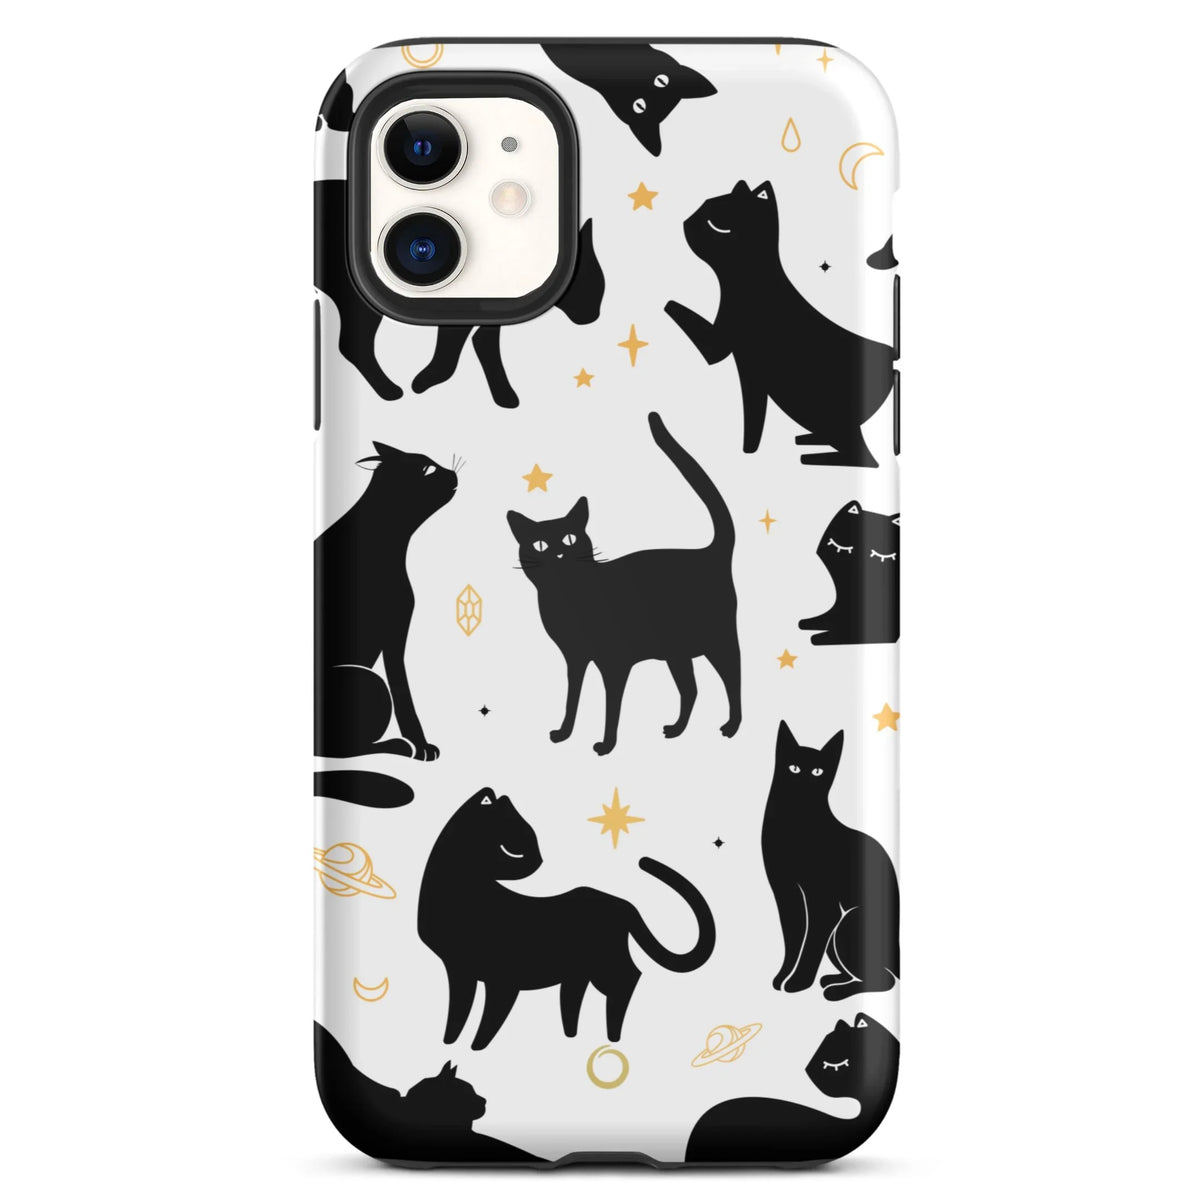 Black Cats iPhone Case - iPhone 11